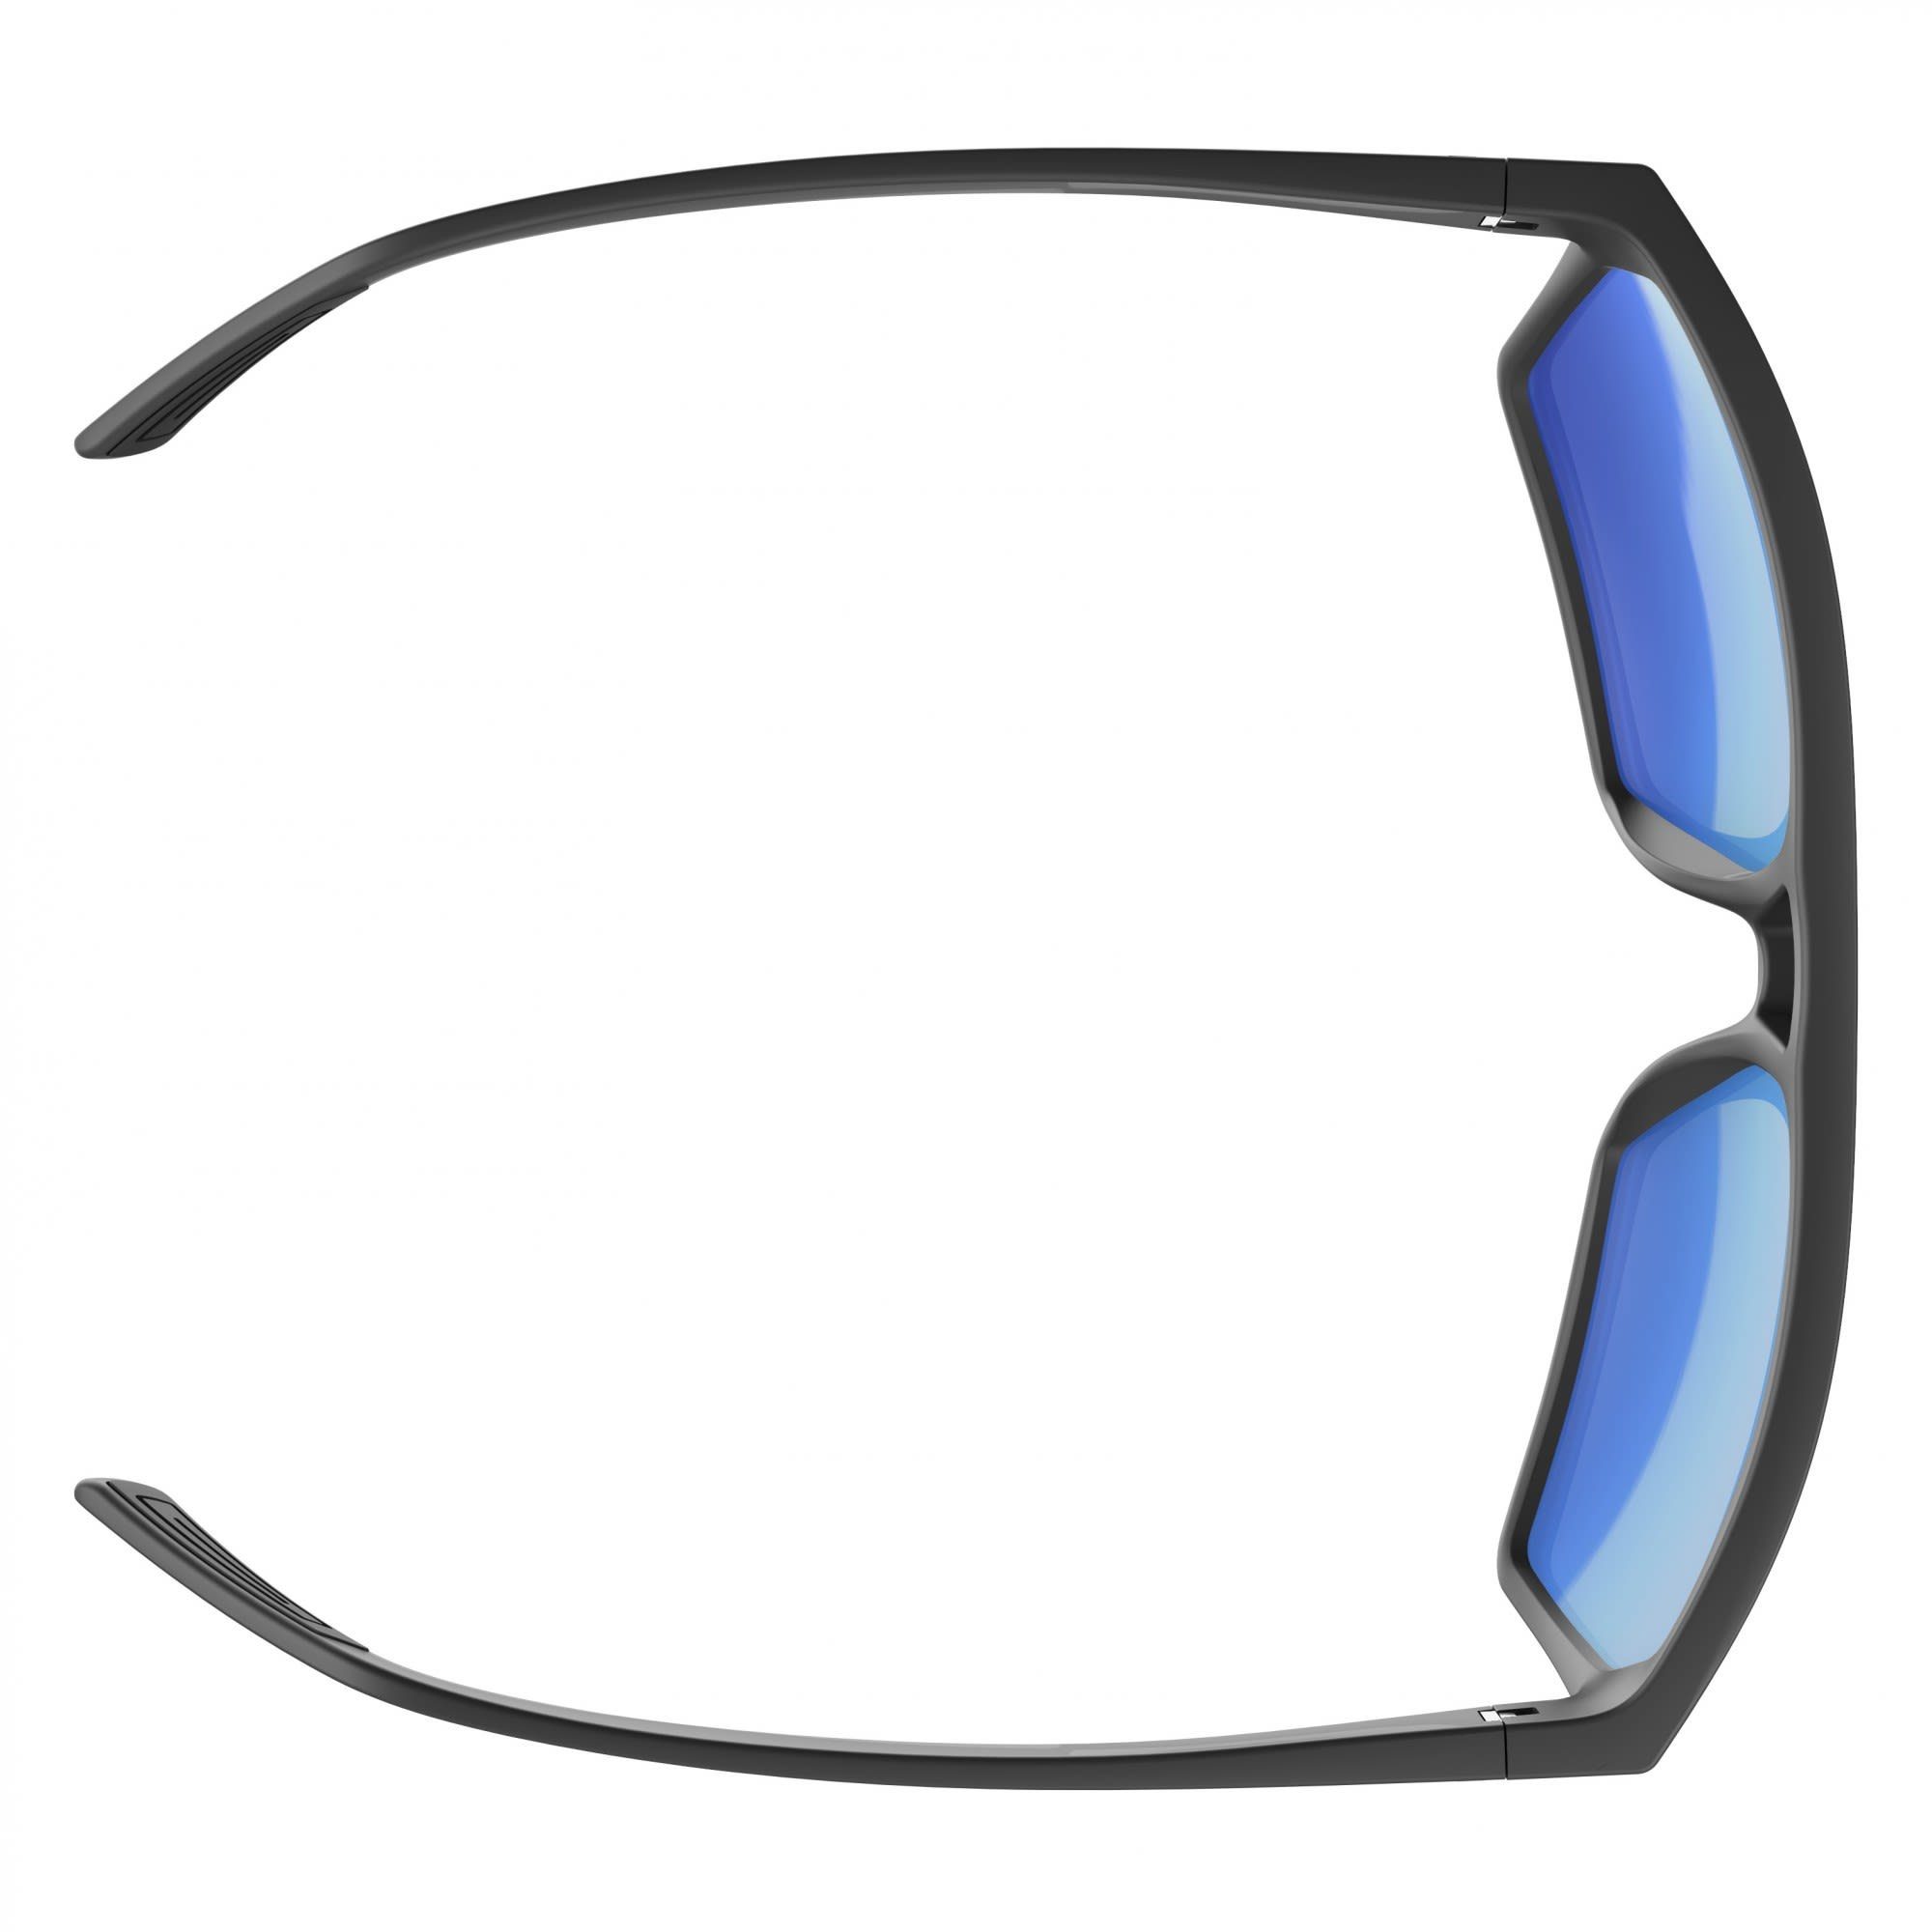 Scott Fahrradbrille Scott Tune Accessoires - Black Chrome Sunglasses Blue